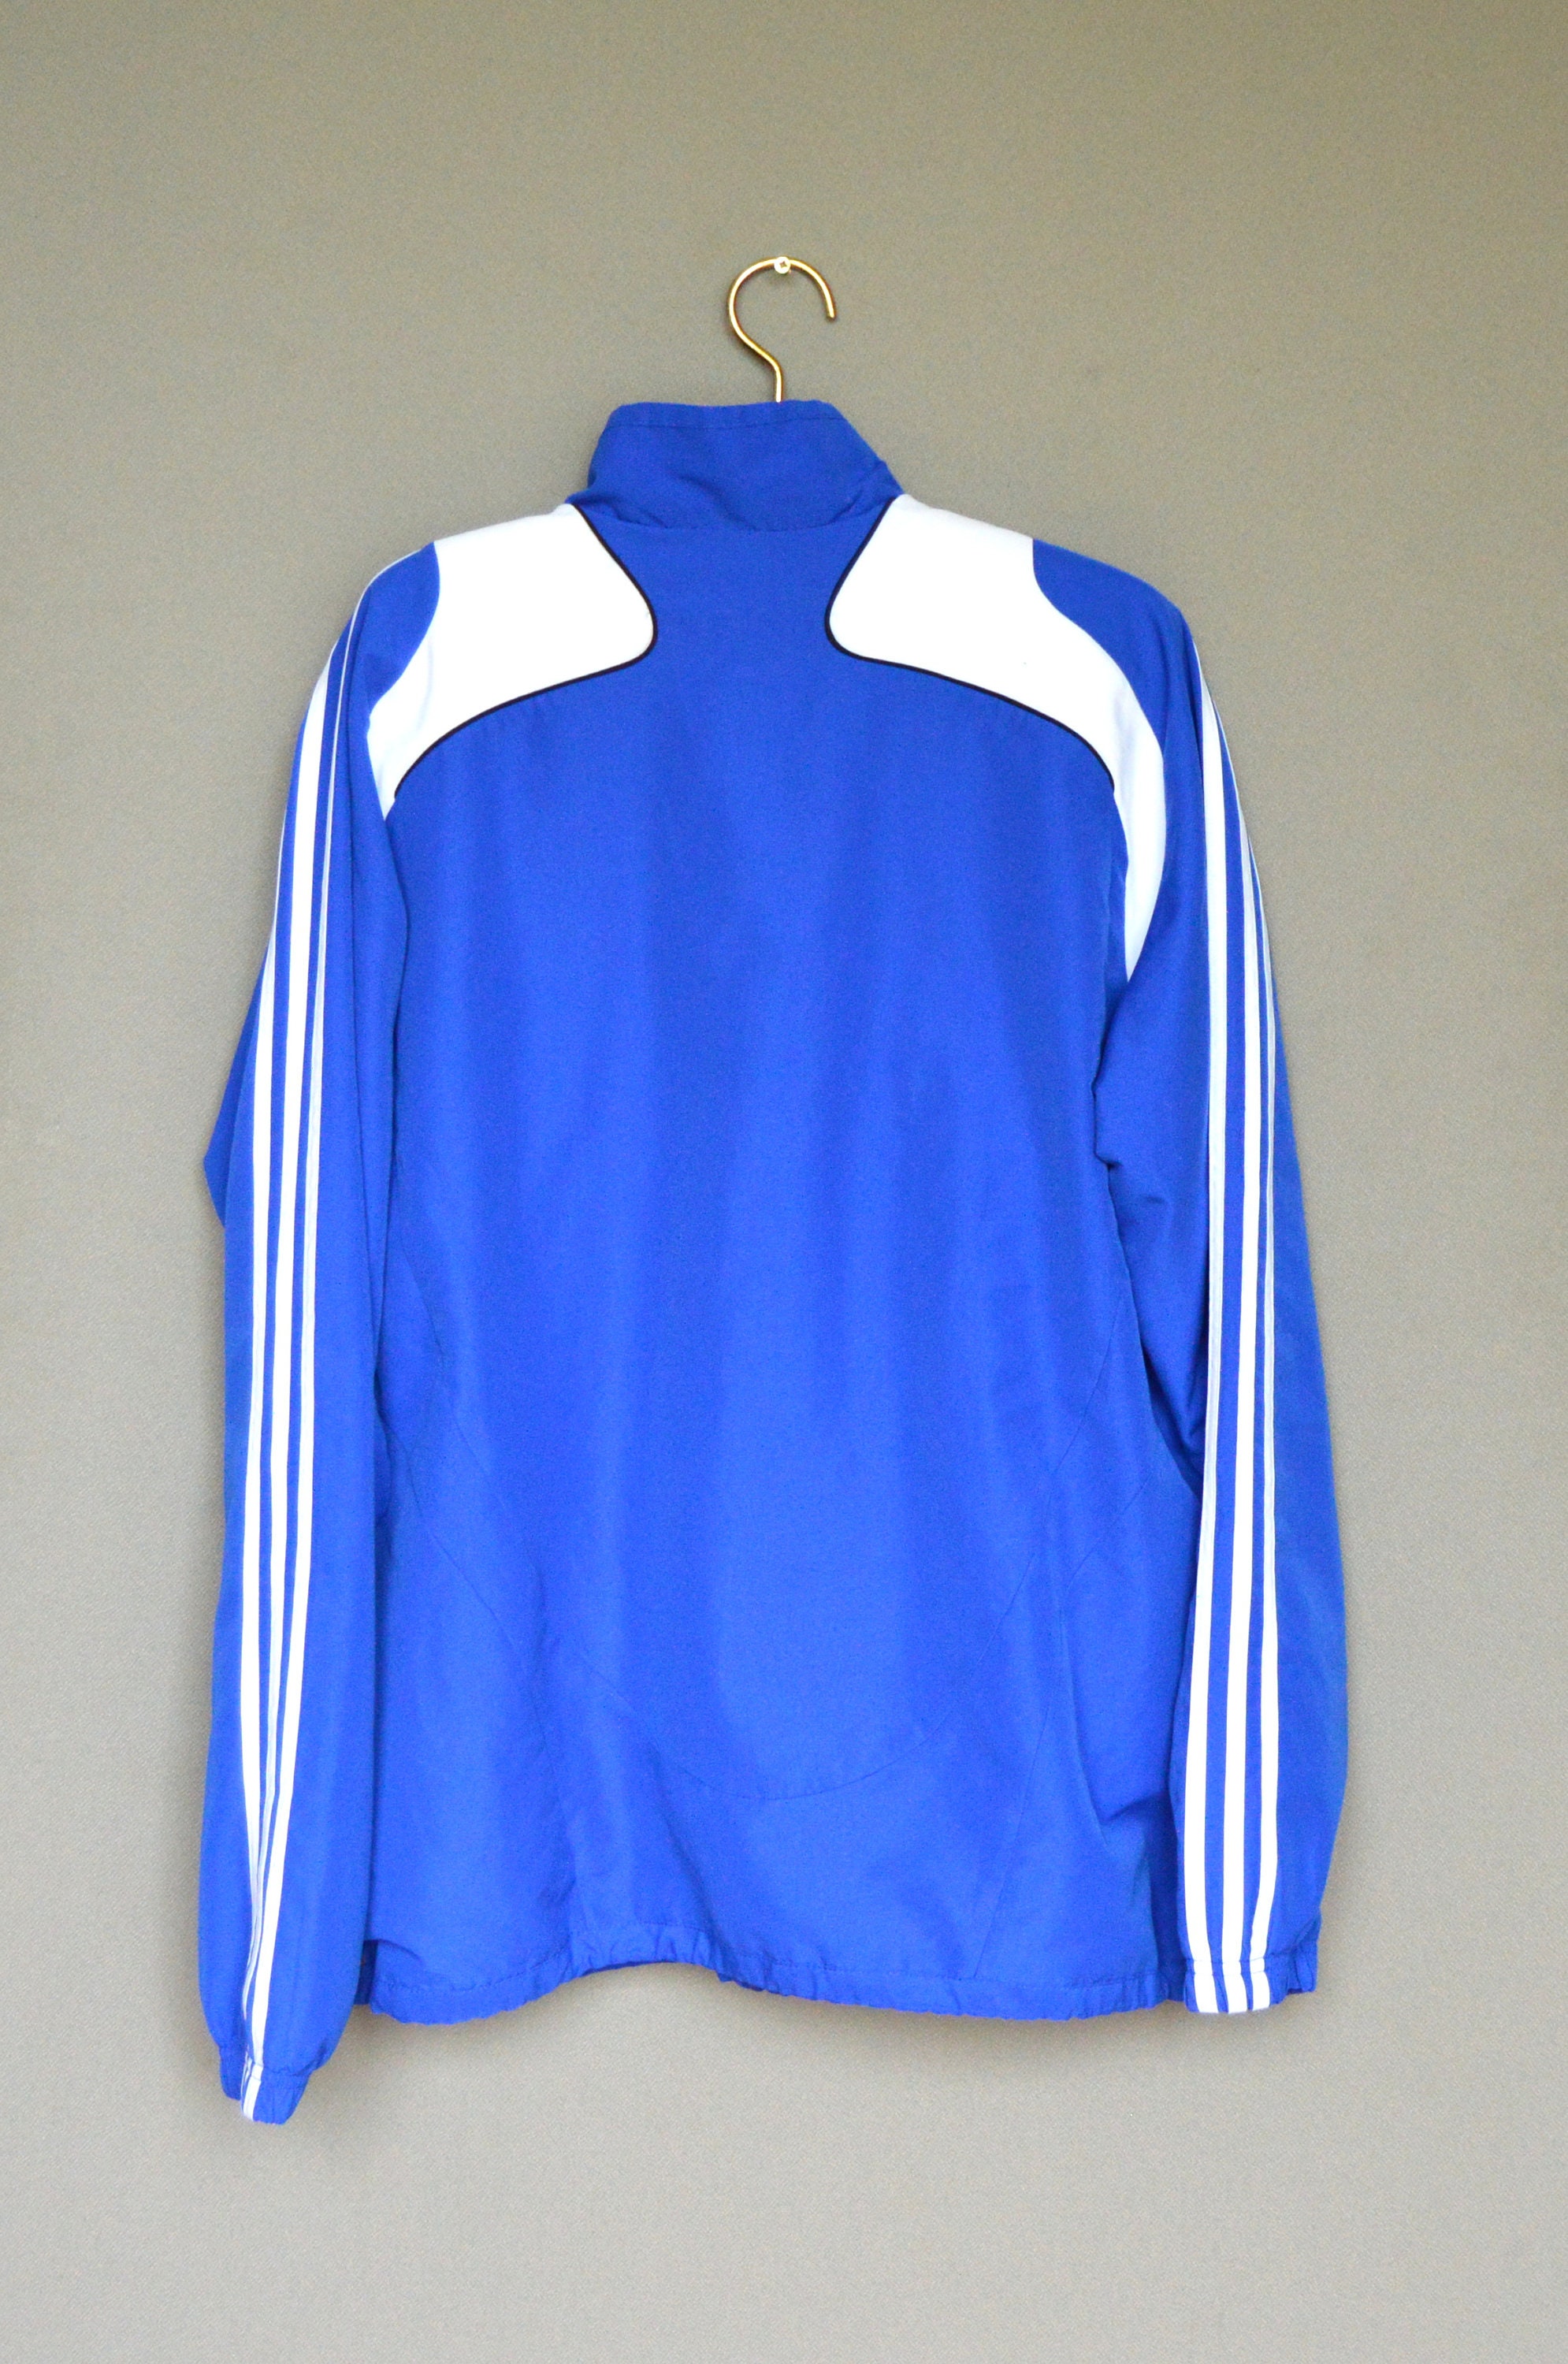 Adidas Sport Jacket Vintage Blue Adidas Windbreaker Adidas - Etsy Sweden